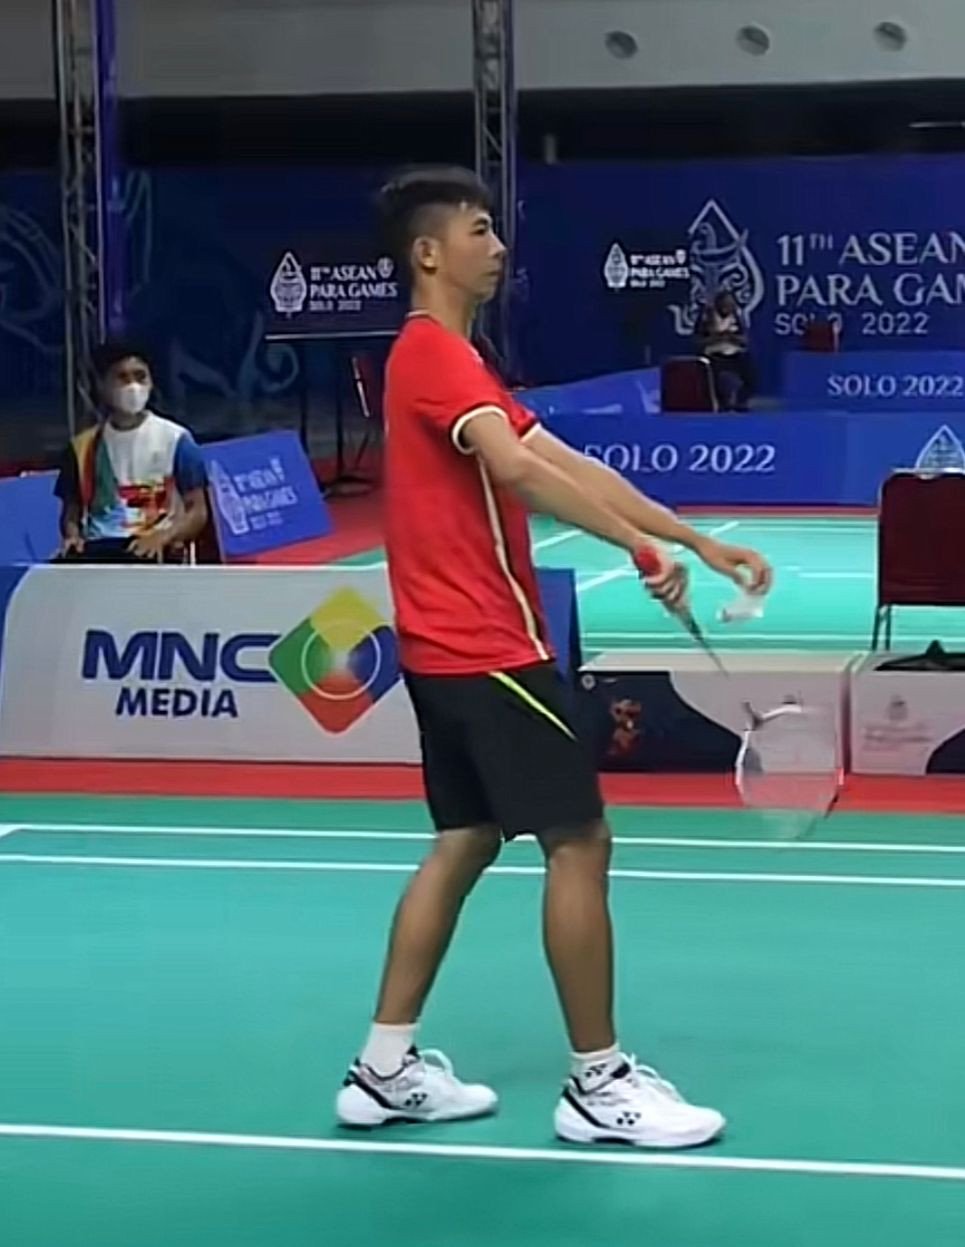 Para-Badminton Internasional 2022 Segera Digelar di Yogyakarta, Berikut Jadwalnya!